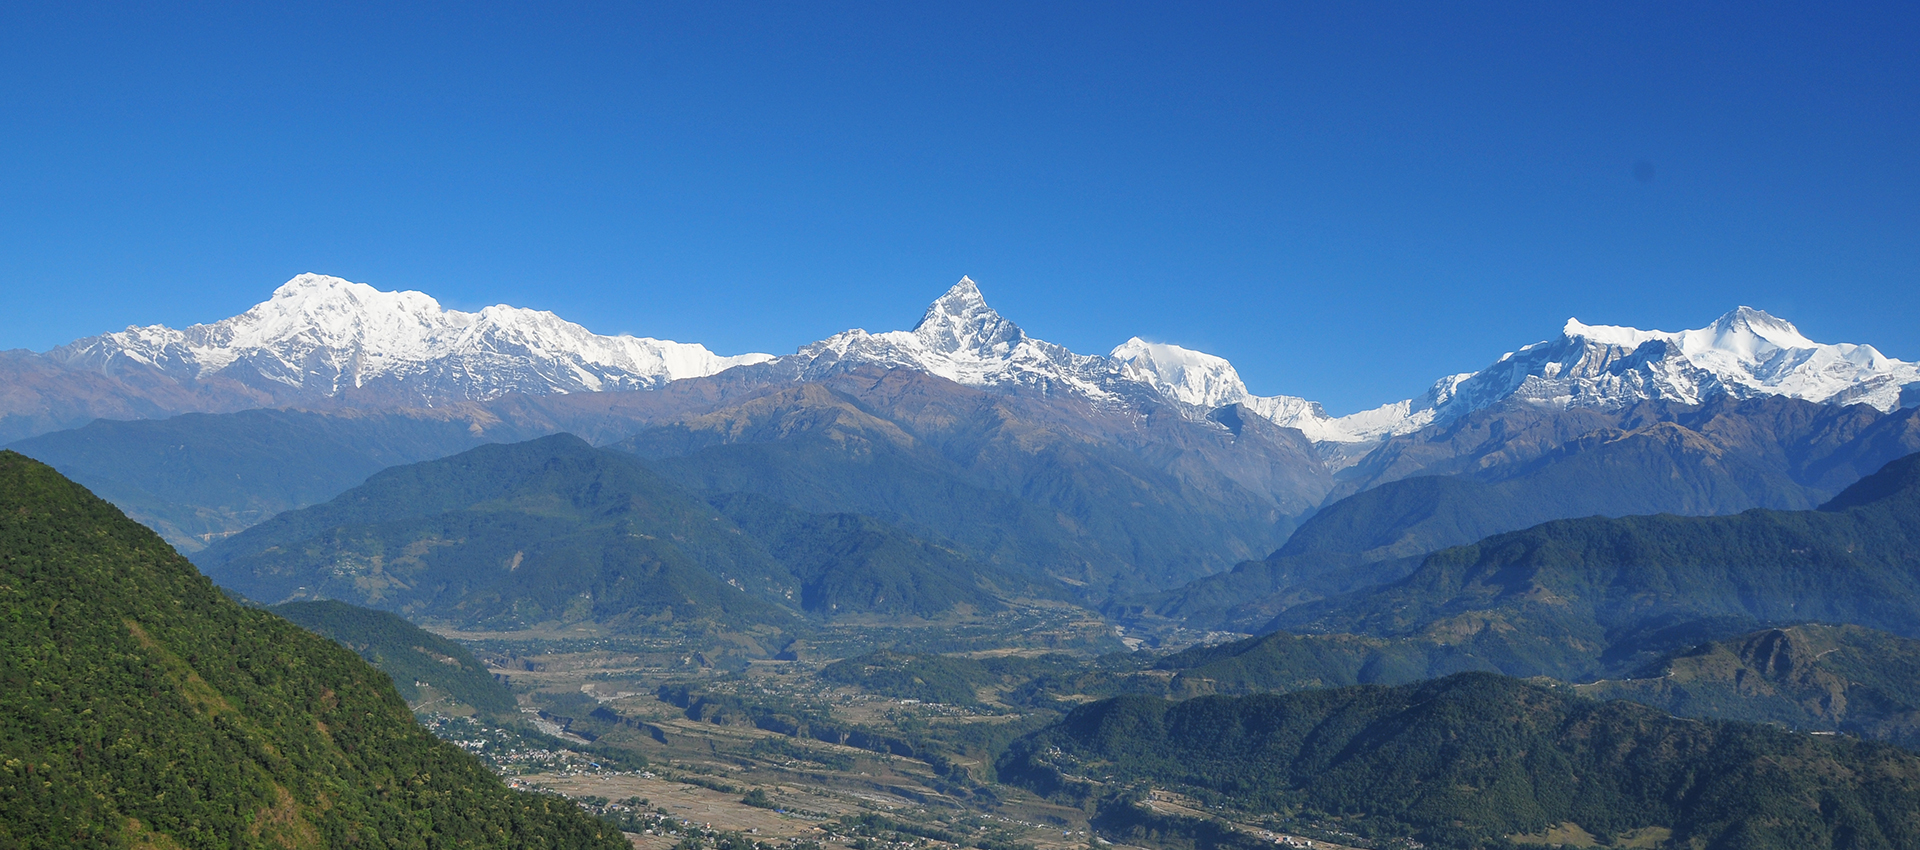 Kathmandu-Pokhara Tour